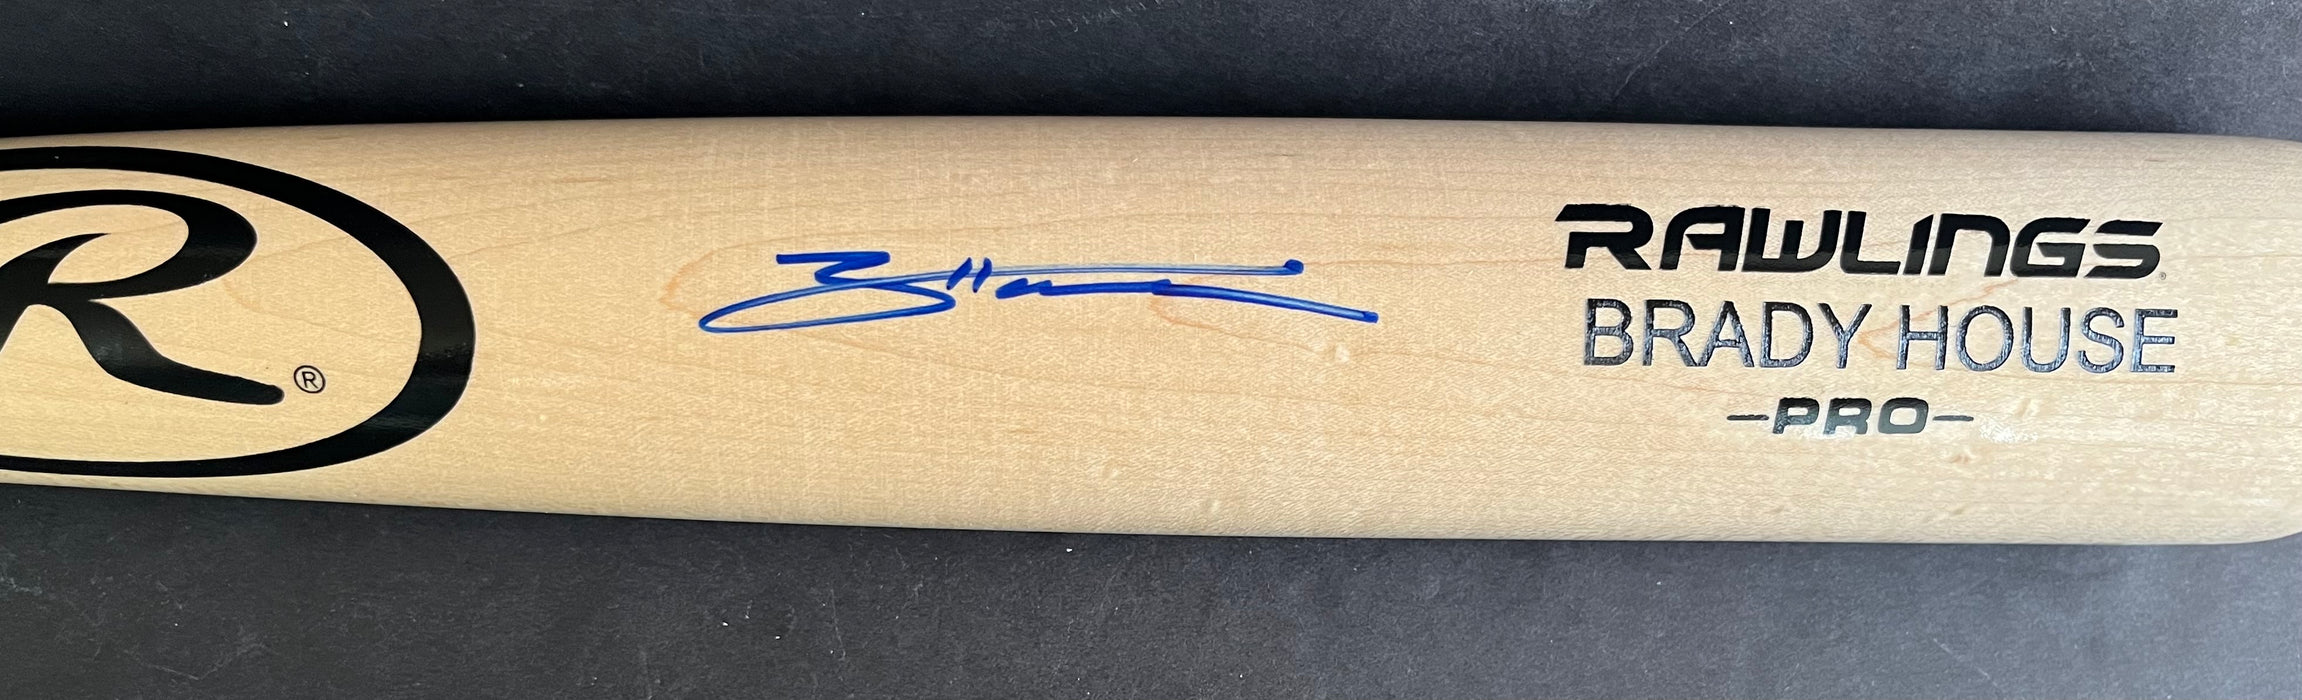 Brady House Nationals Signed Engraved Bat Beckett Rookie Hologram Blonde